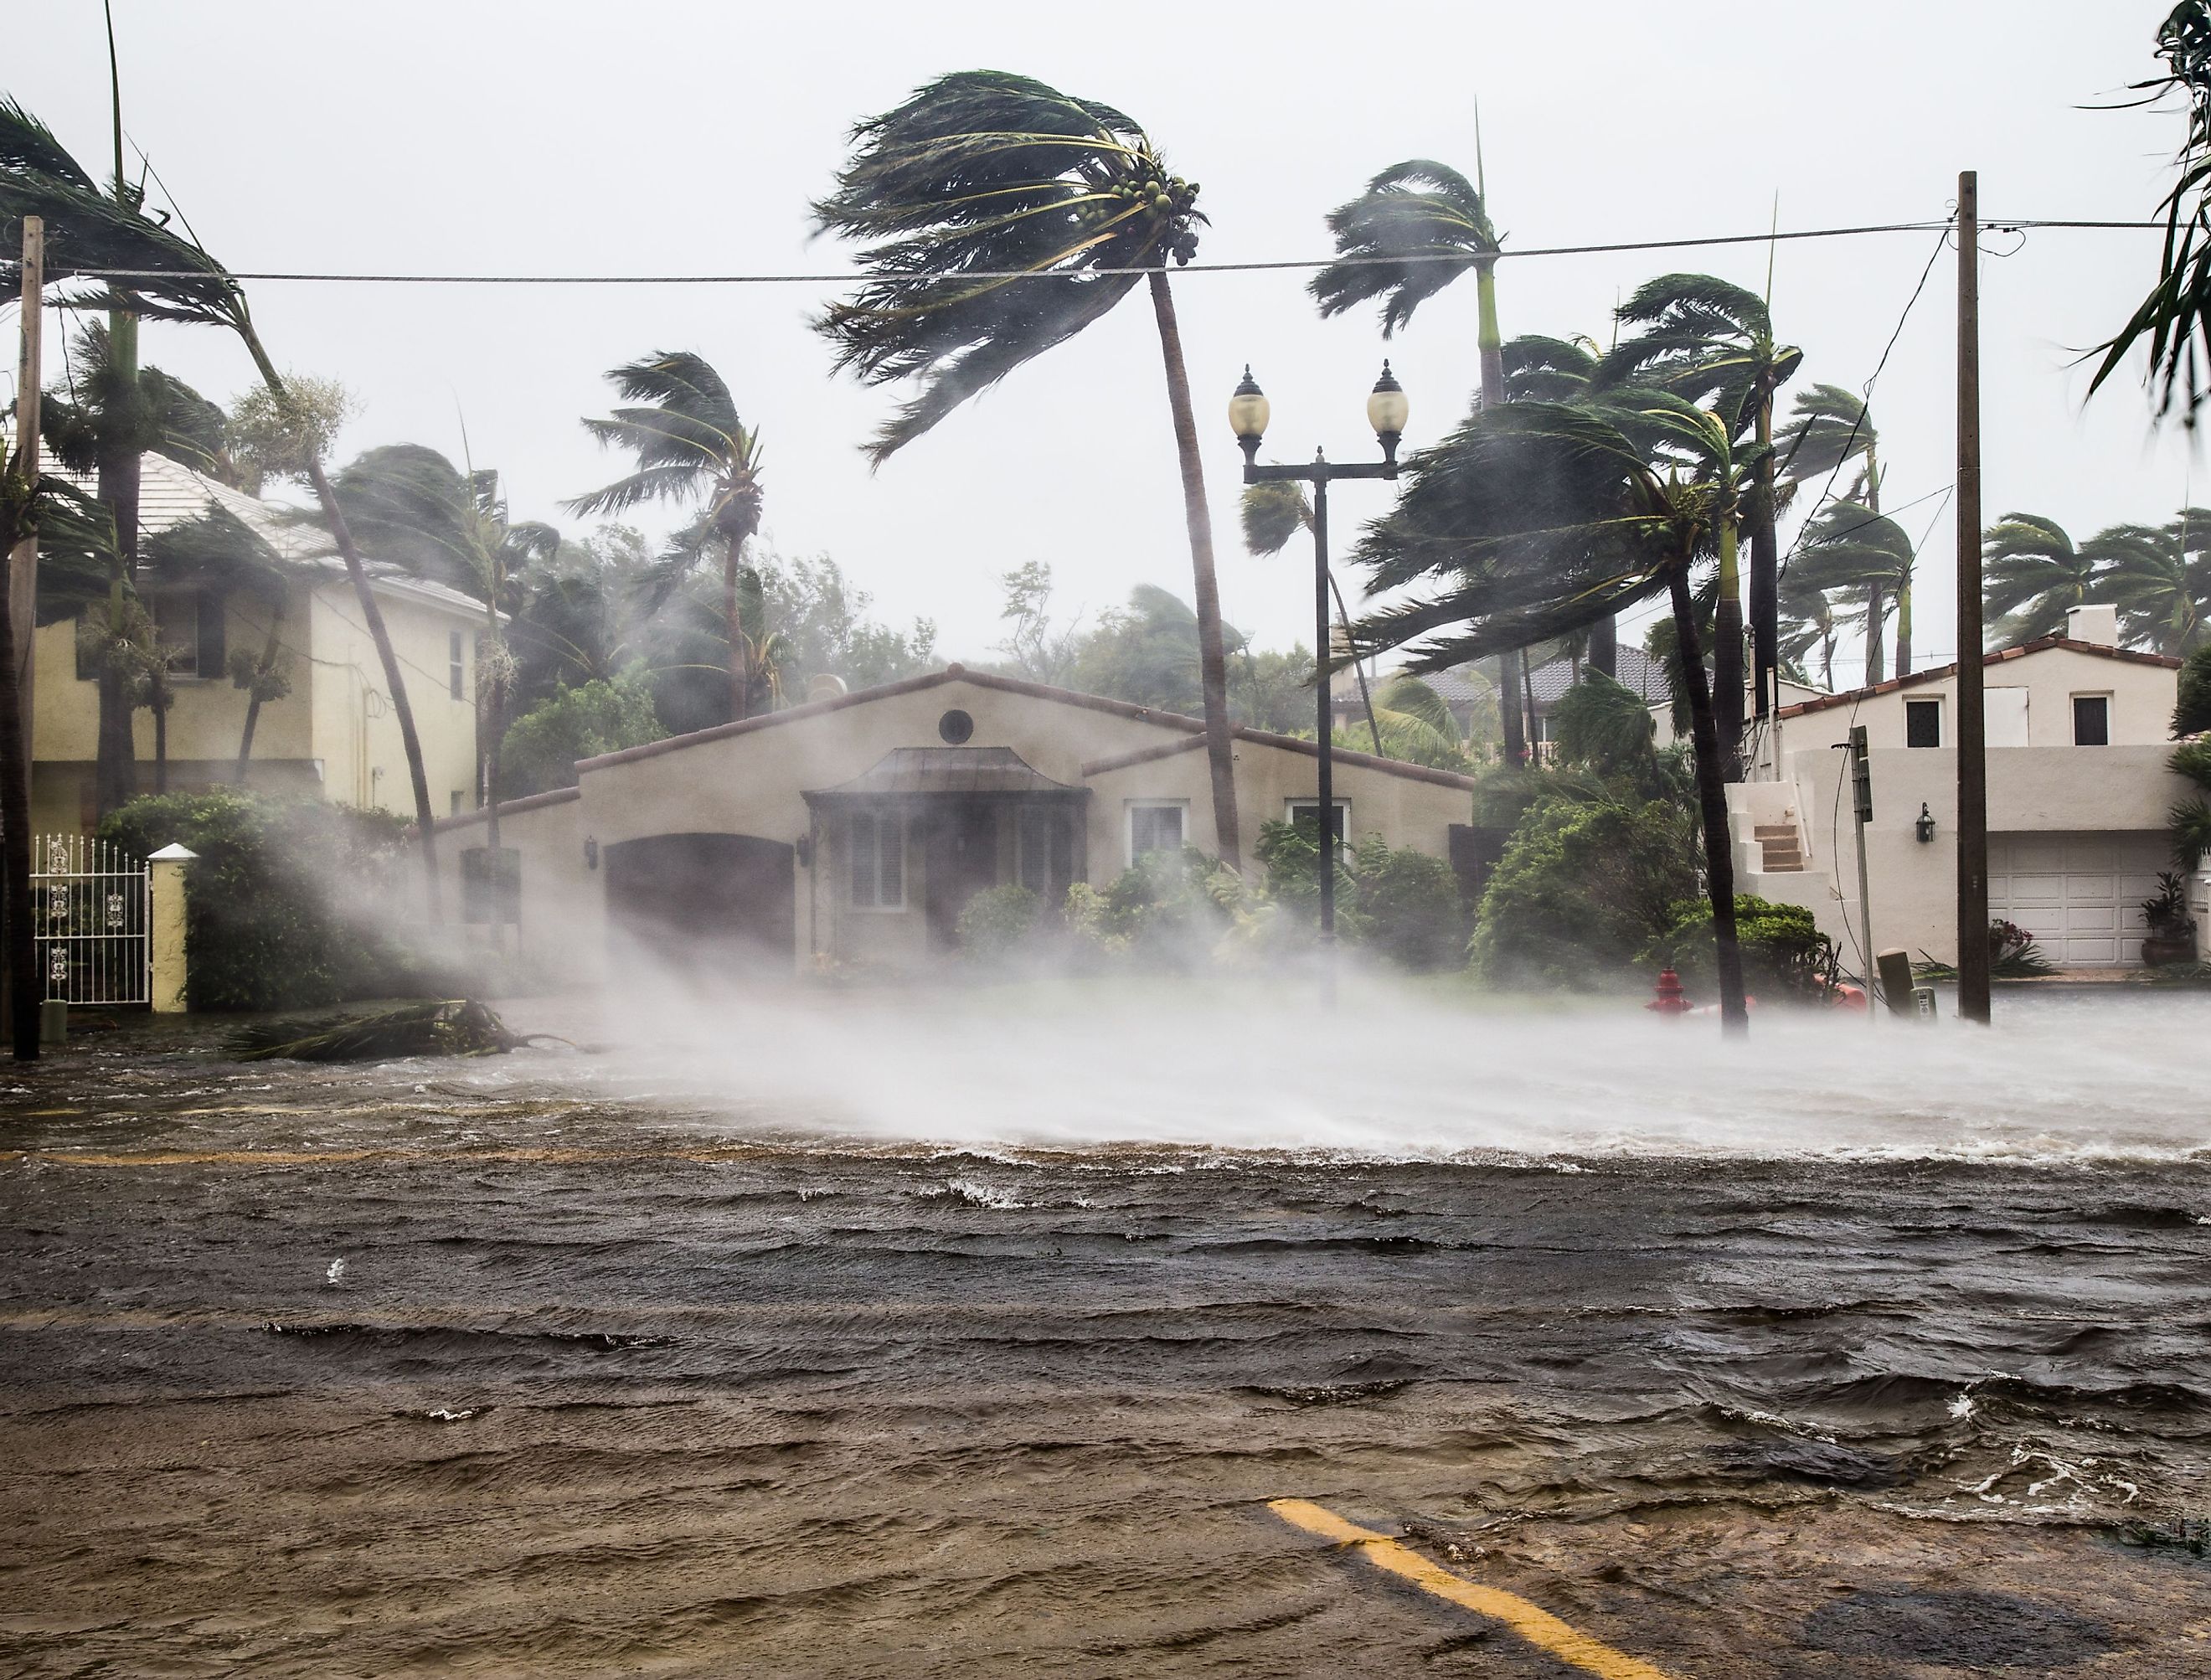 A flooded street after catastrophic Hurricane Irma hit Fort Lauderdale, FL. Image credit FotoKina via shutterstock